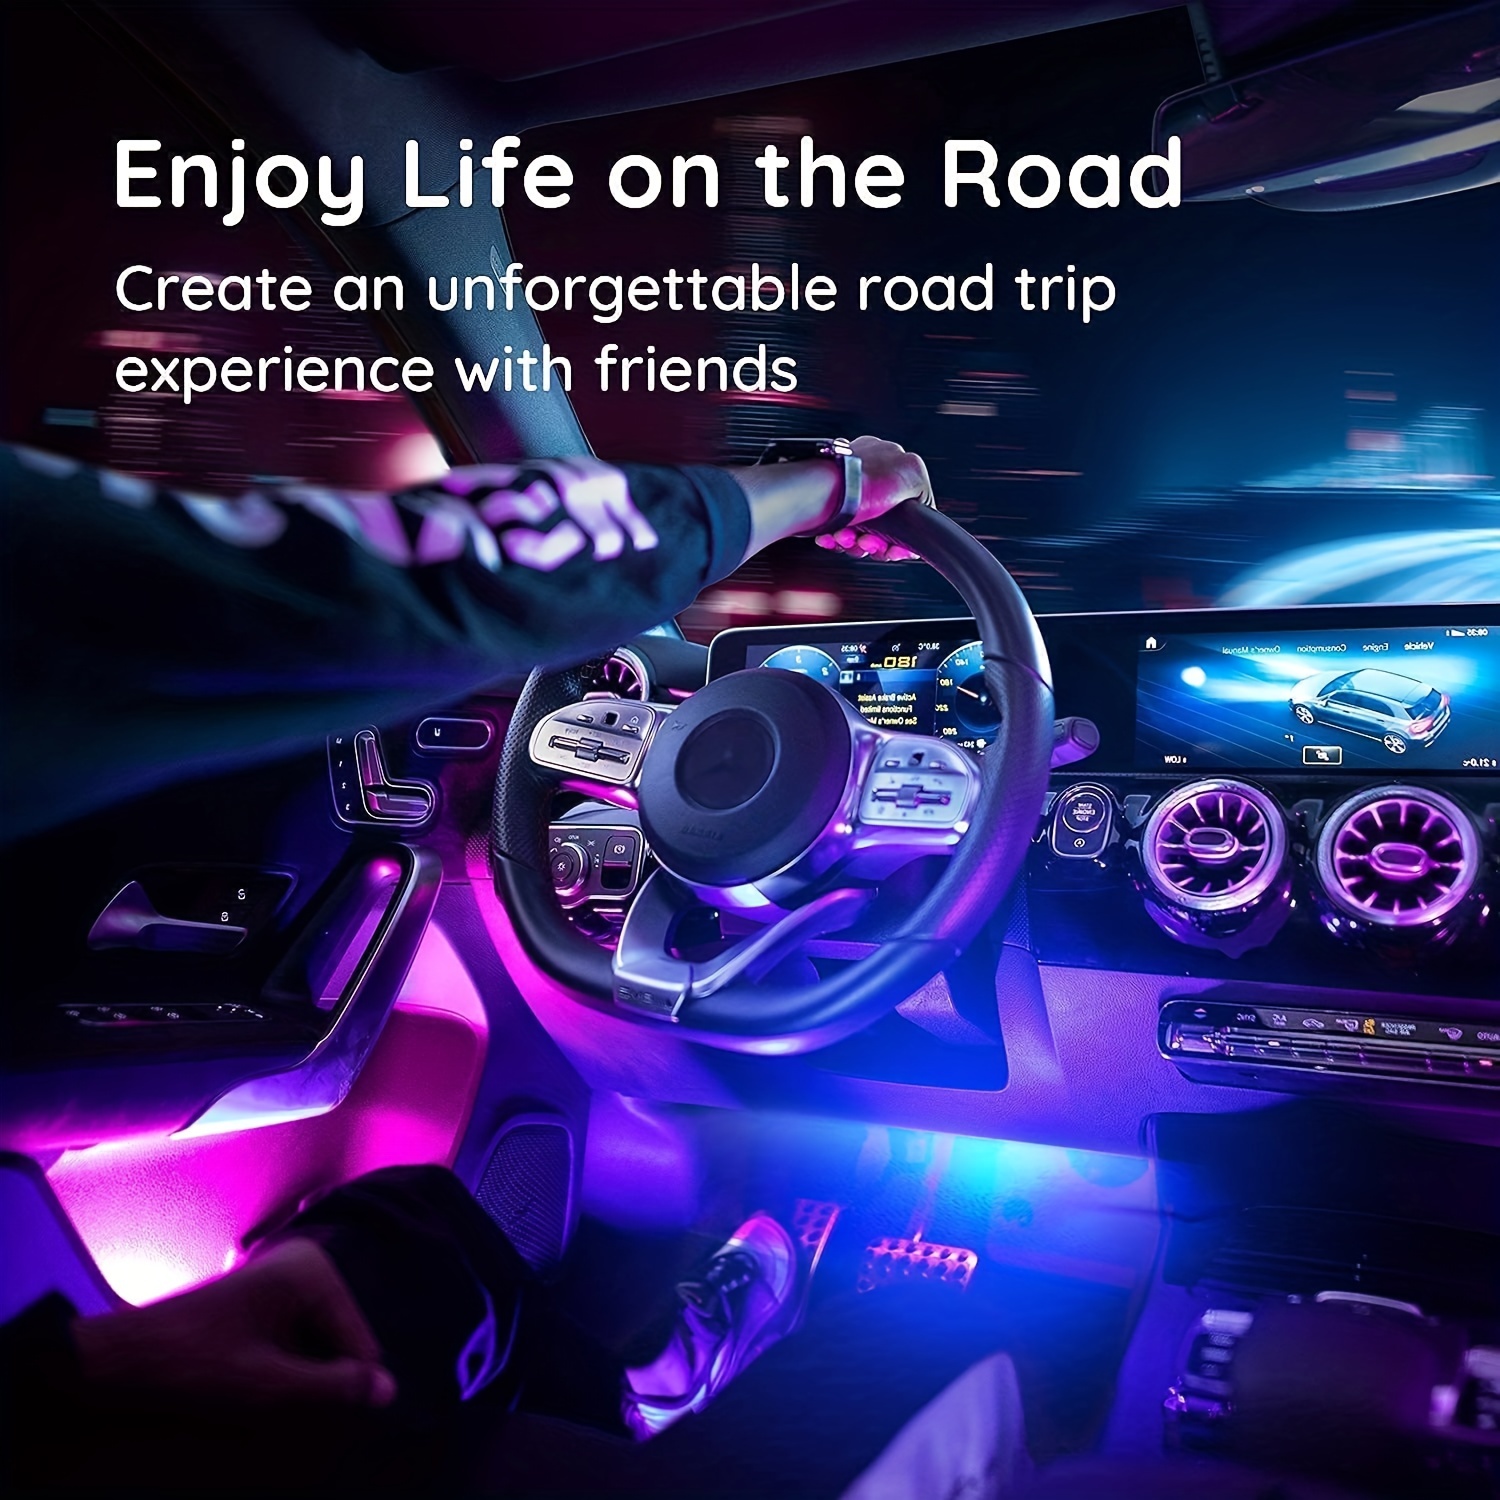 Govee LED Car Lights with App Control, Smart Interior DIY RGB